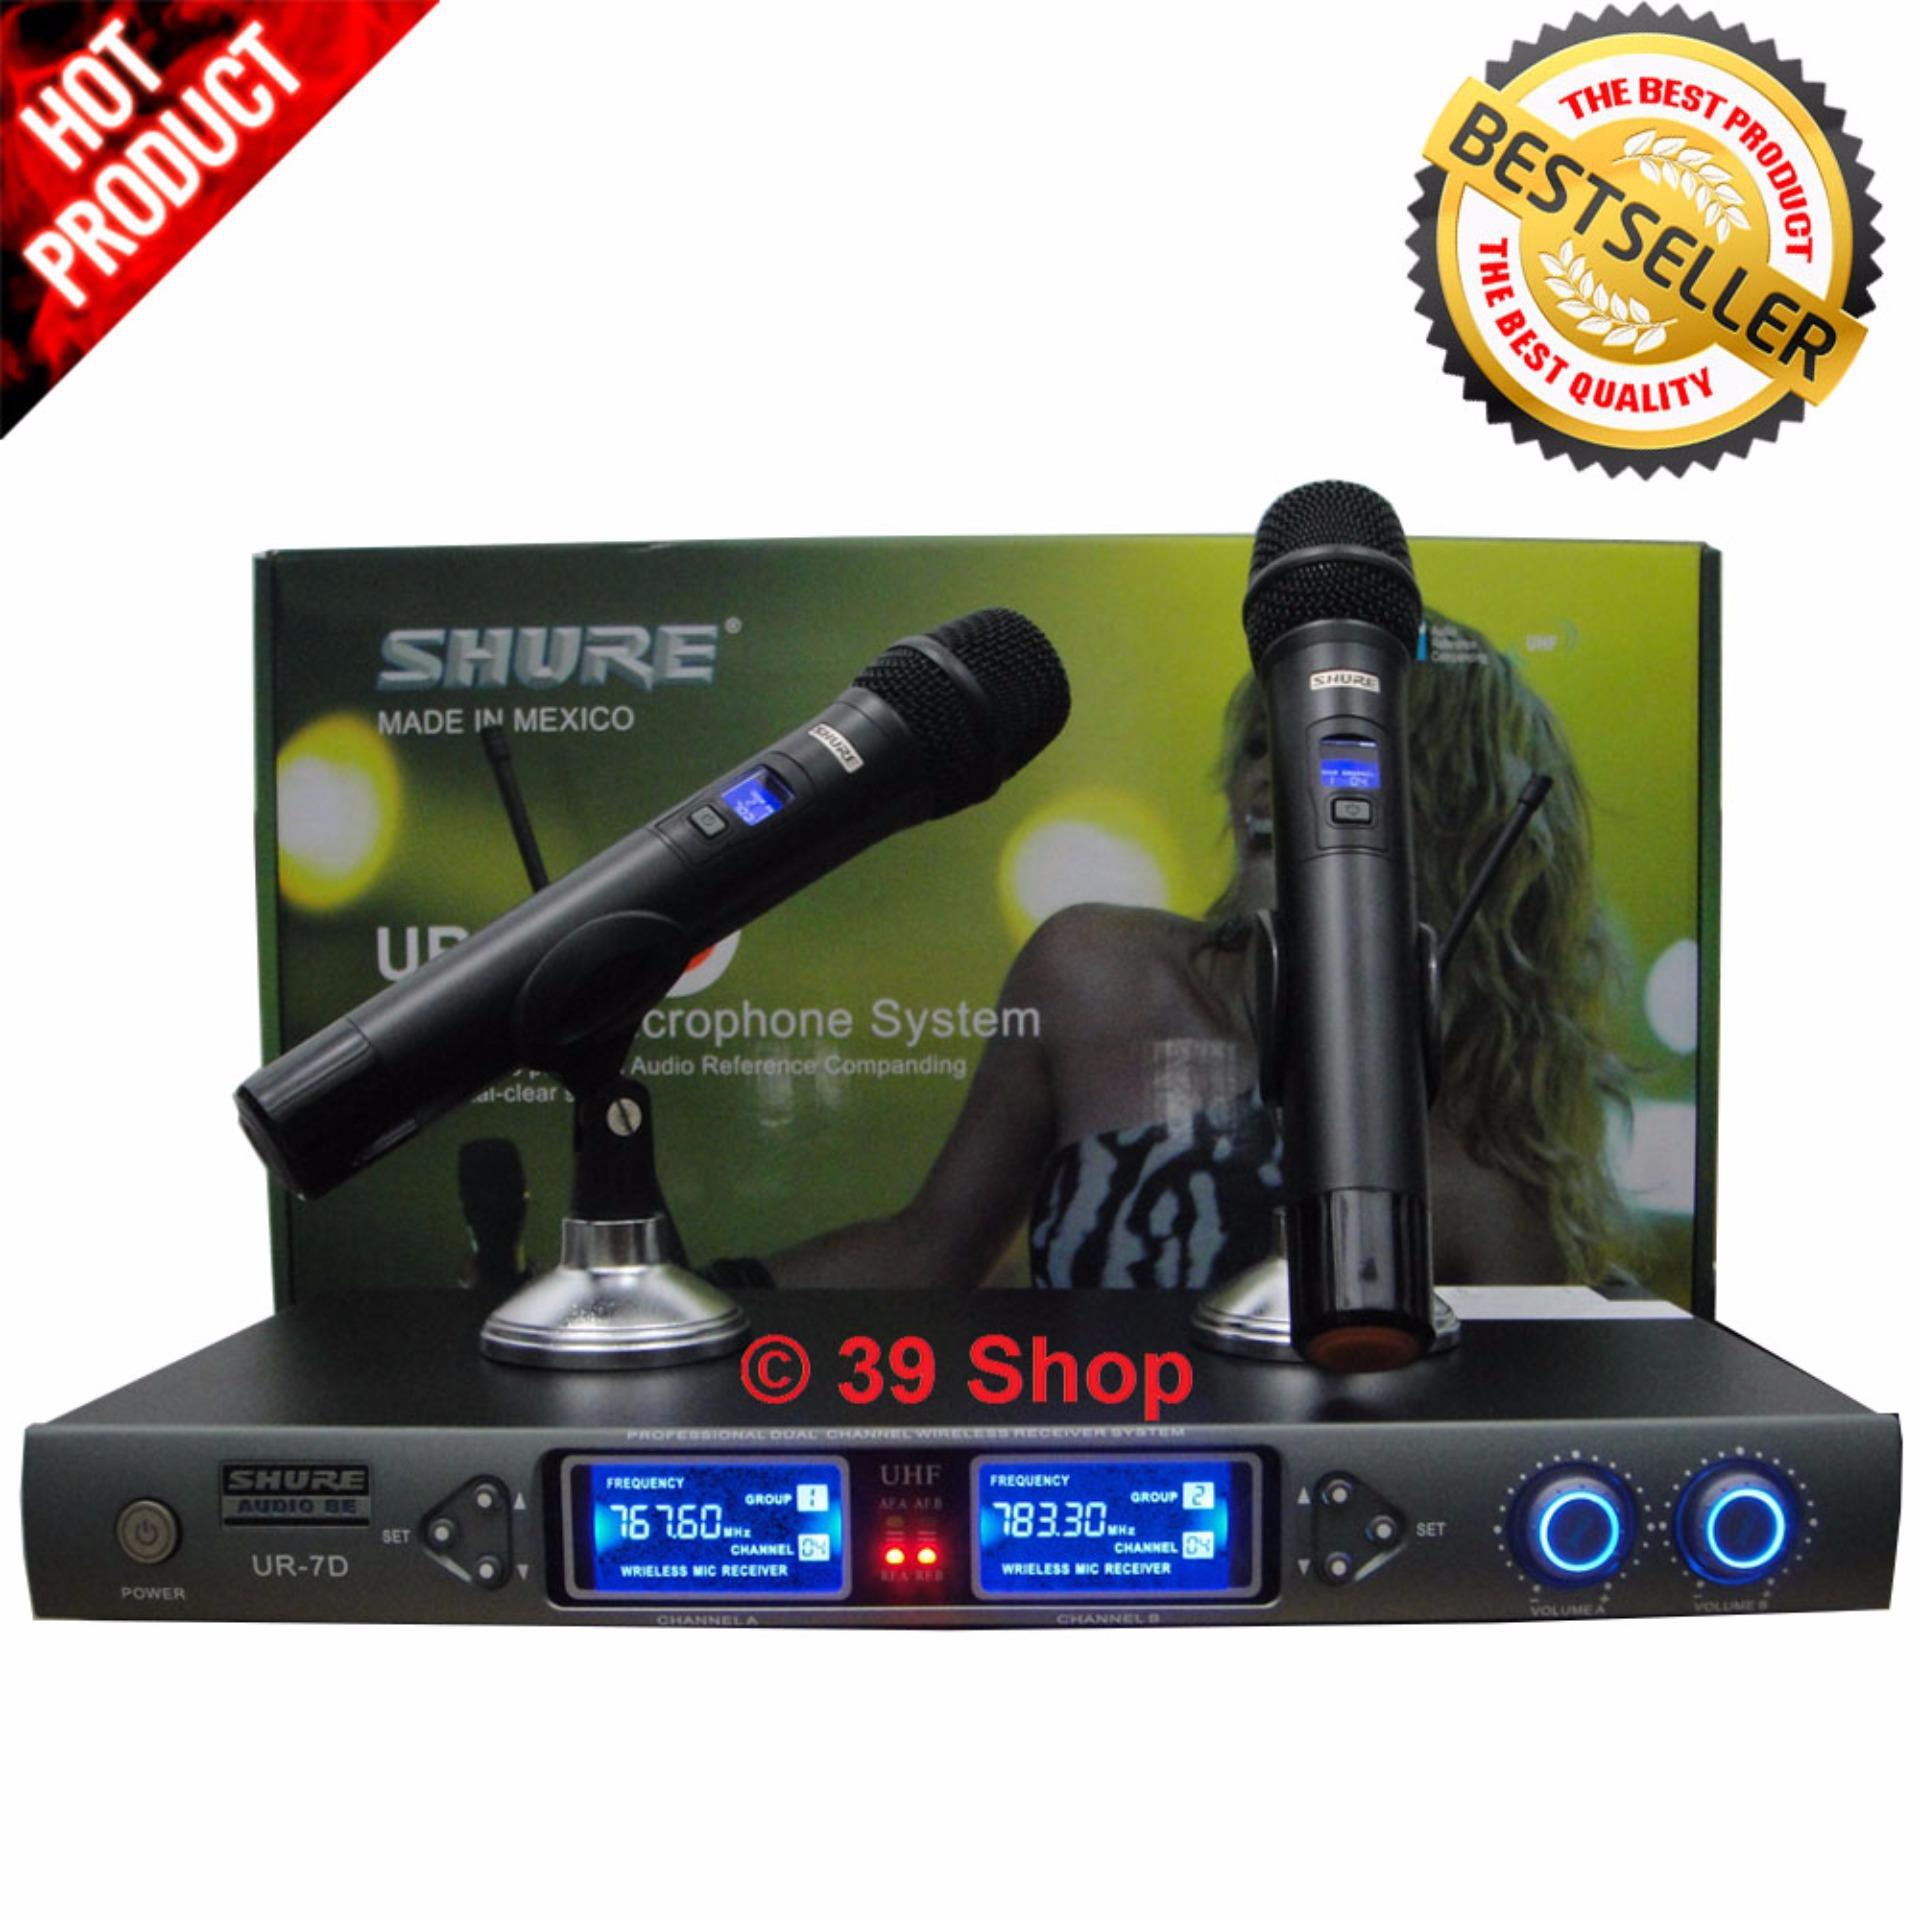 PROMO Mic Wireless SHURE UR 7D BLACK Edition Wireless Microphone 39Shop
UR7D UR7 D